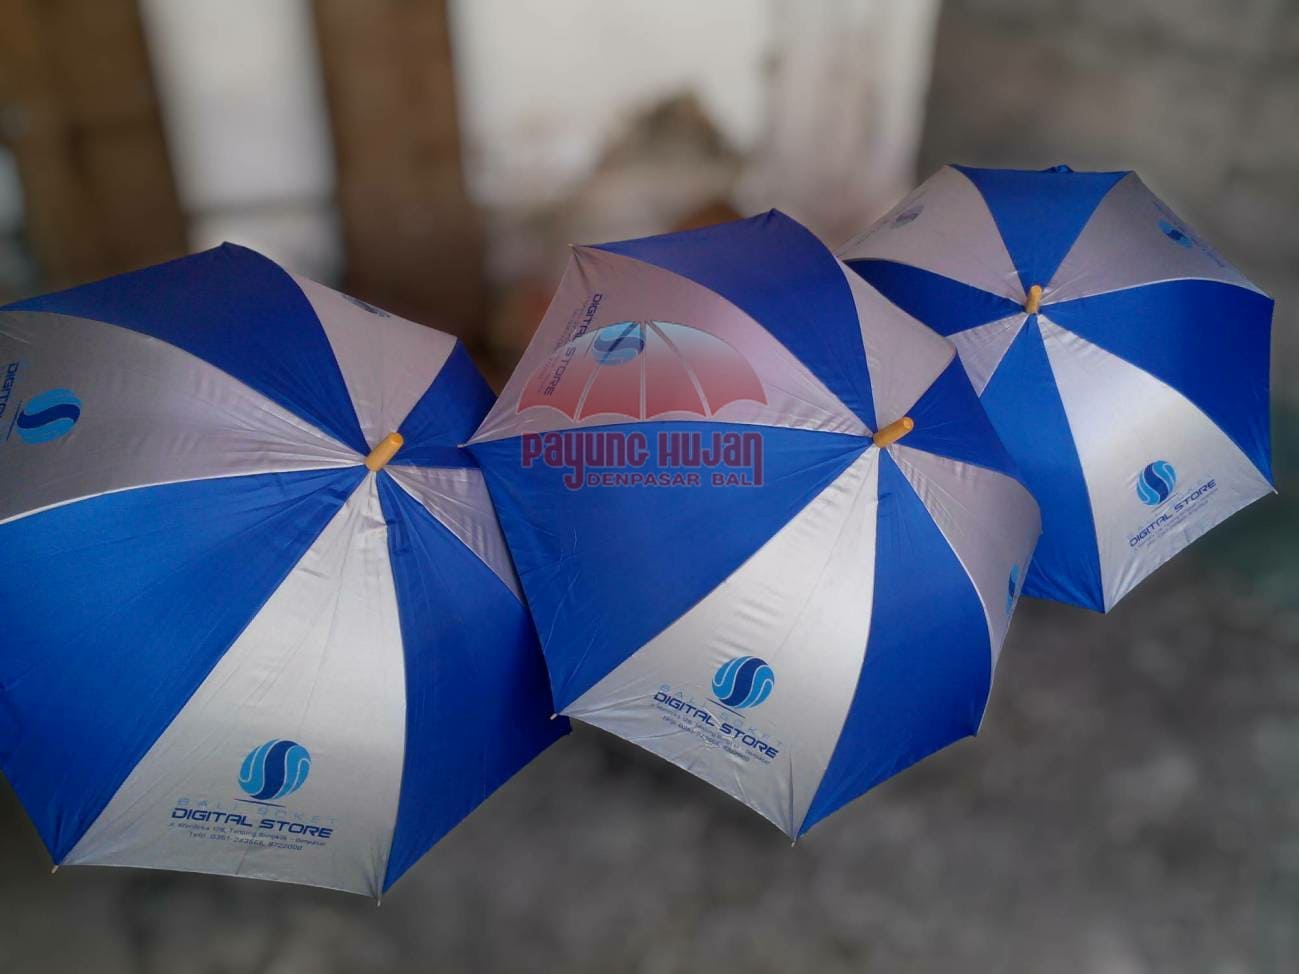 Payung hujan logo Bali Soket